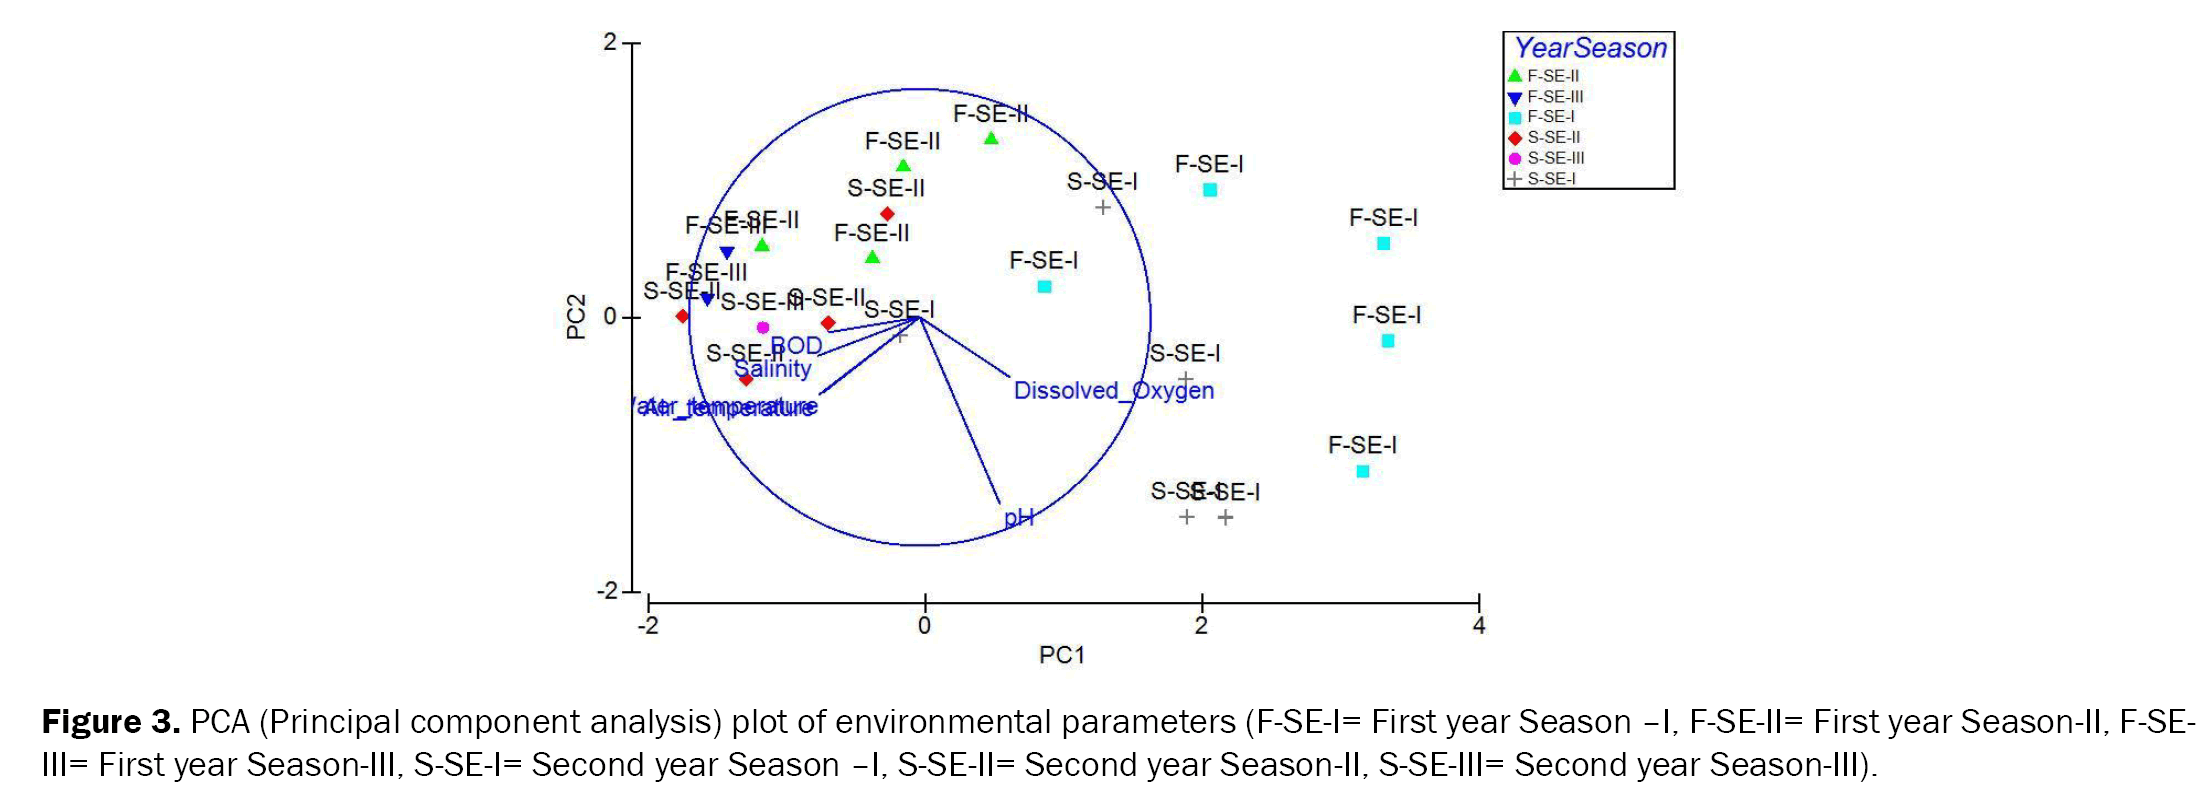 Biology-PCA-Principal-component-analysis-plot-environmental-parameters